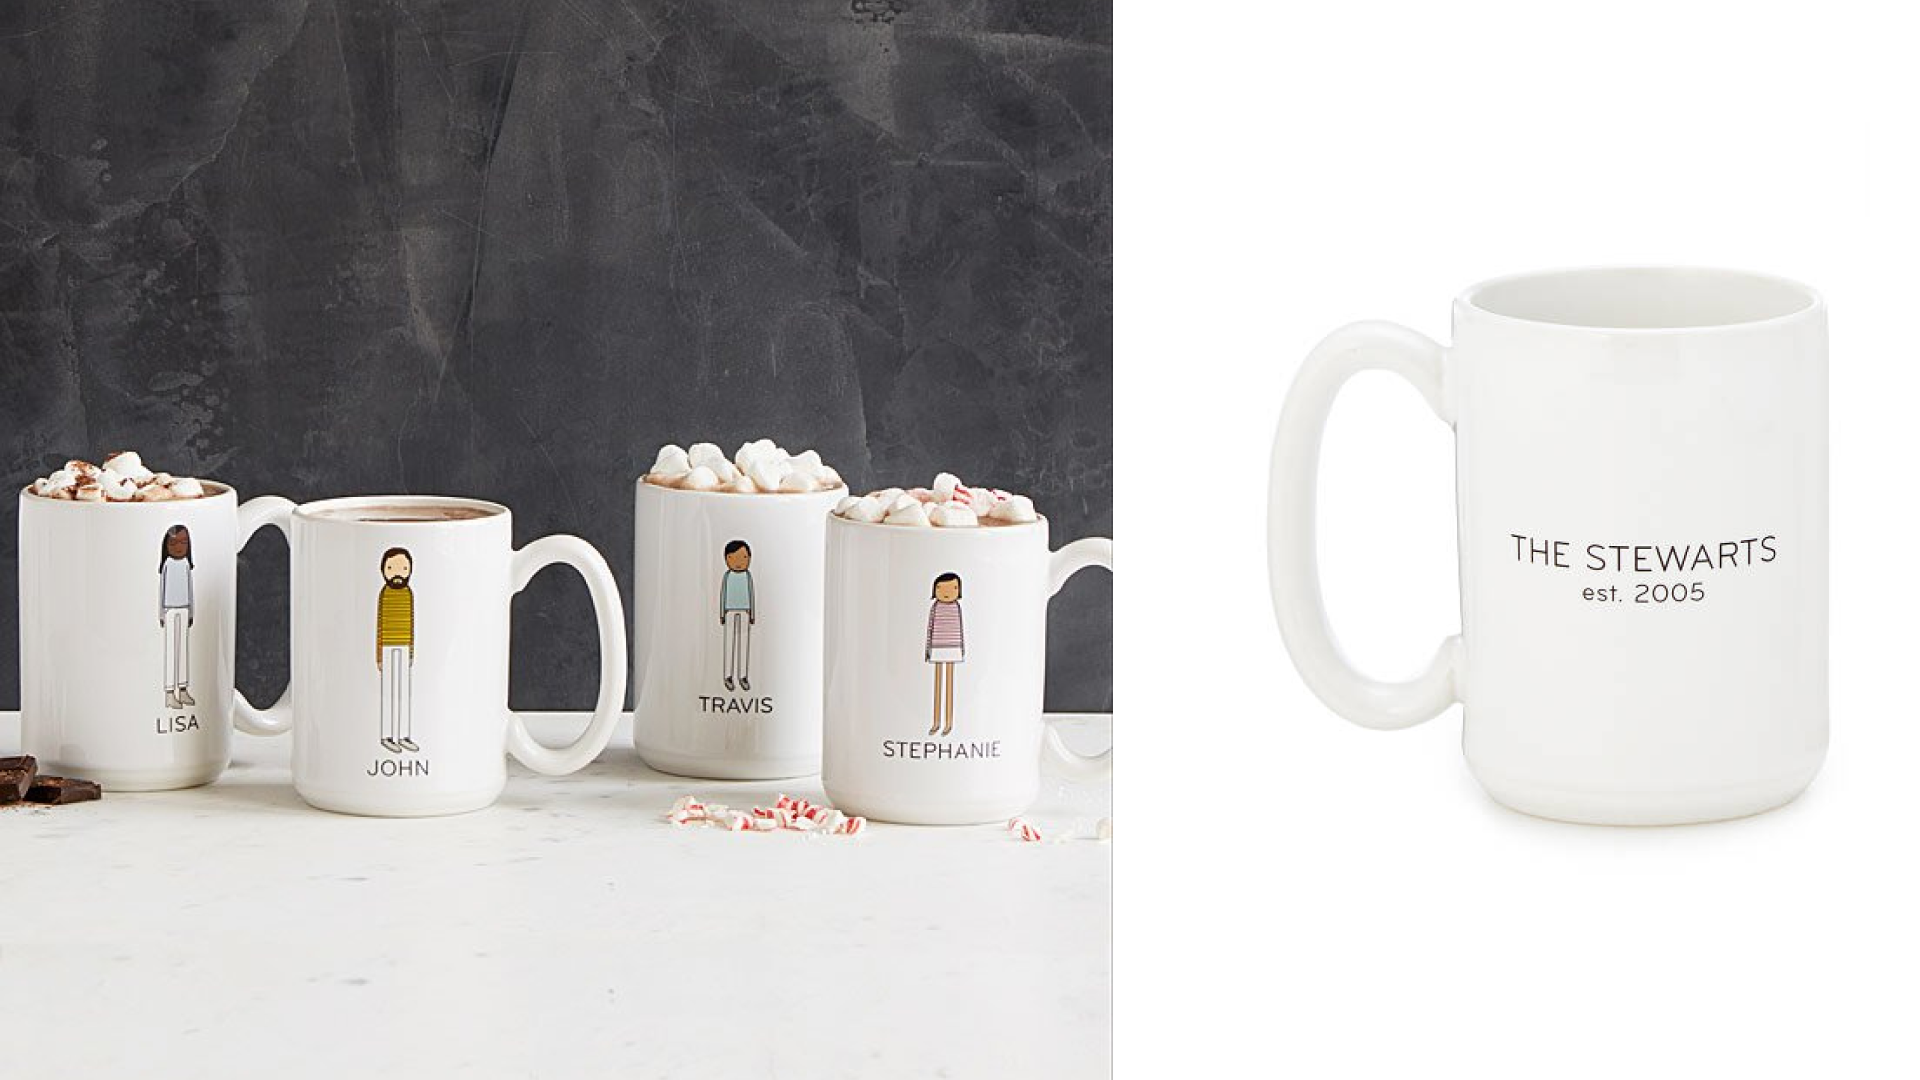 Personalized family mugs